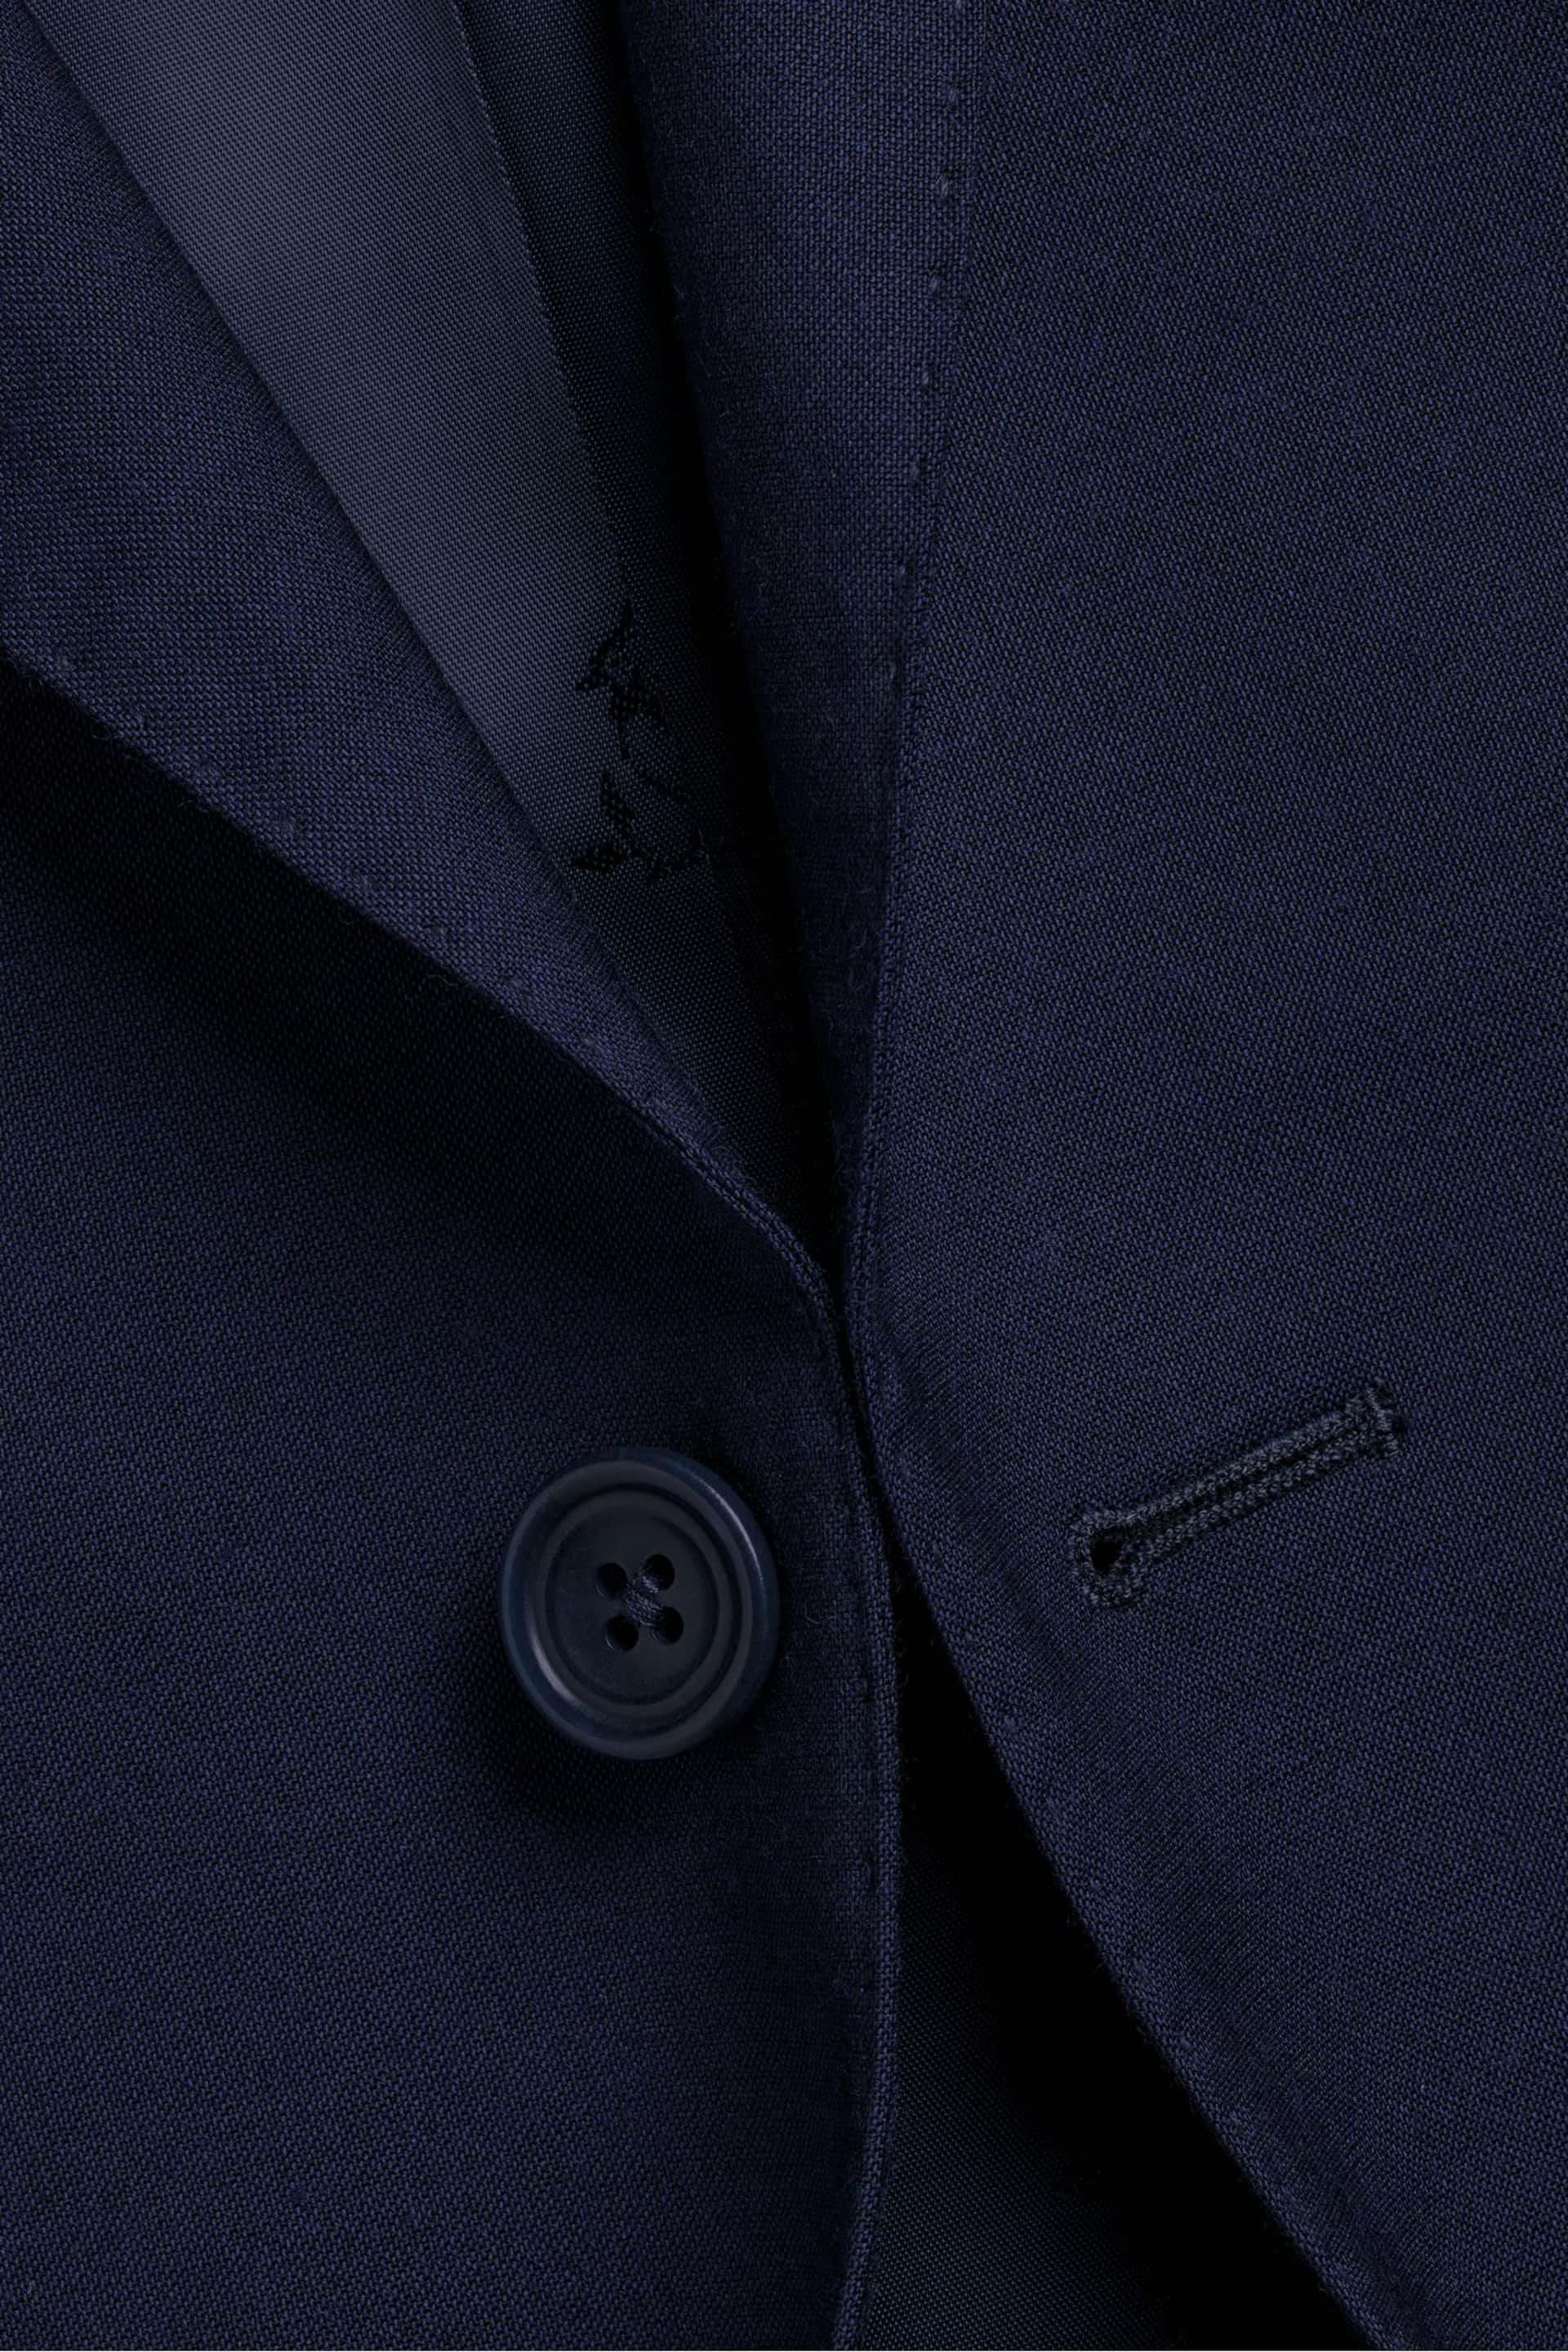 Charles Tyrwhitt Blue Slim Fit Italian Luxury Jacket - Image 5 of 5